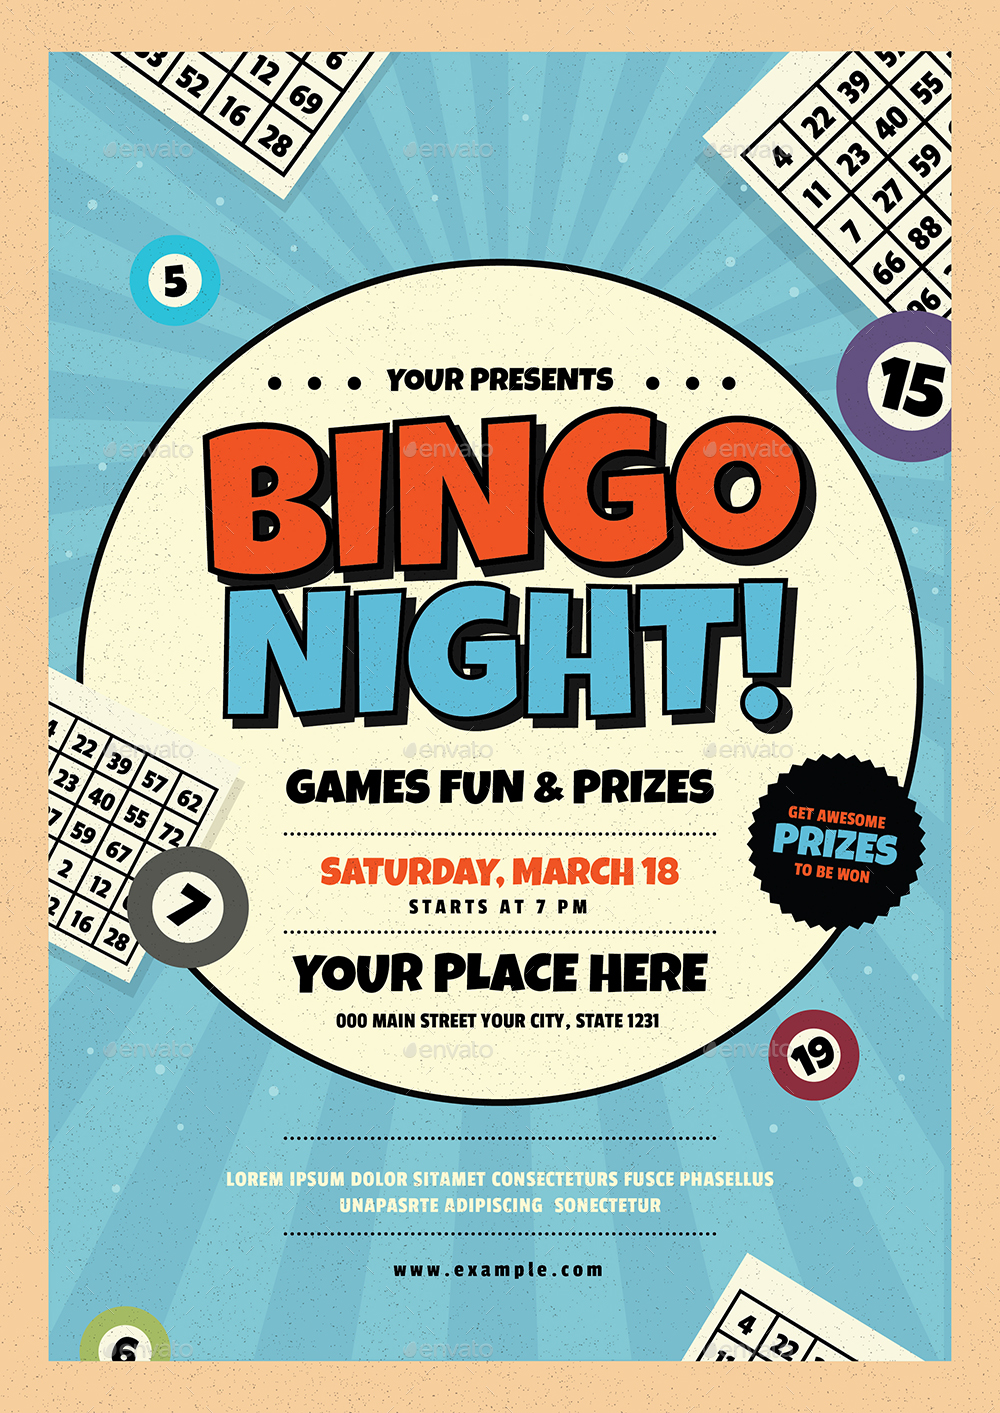 Bingo Night Event Flyer Regarding Bingo Night Flyer Template